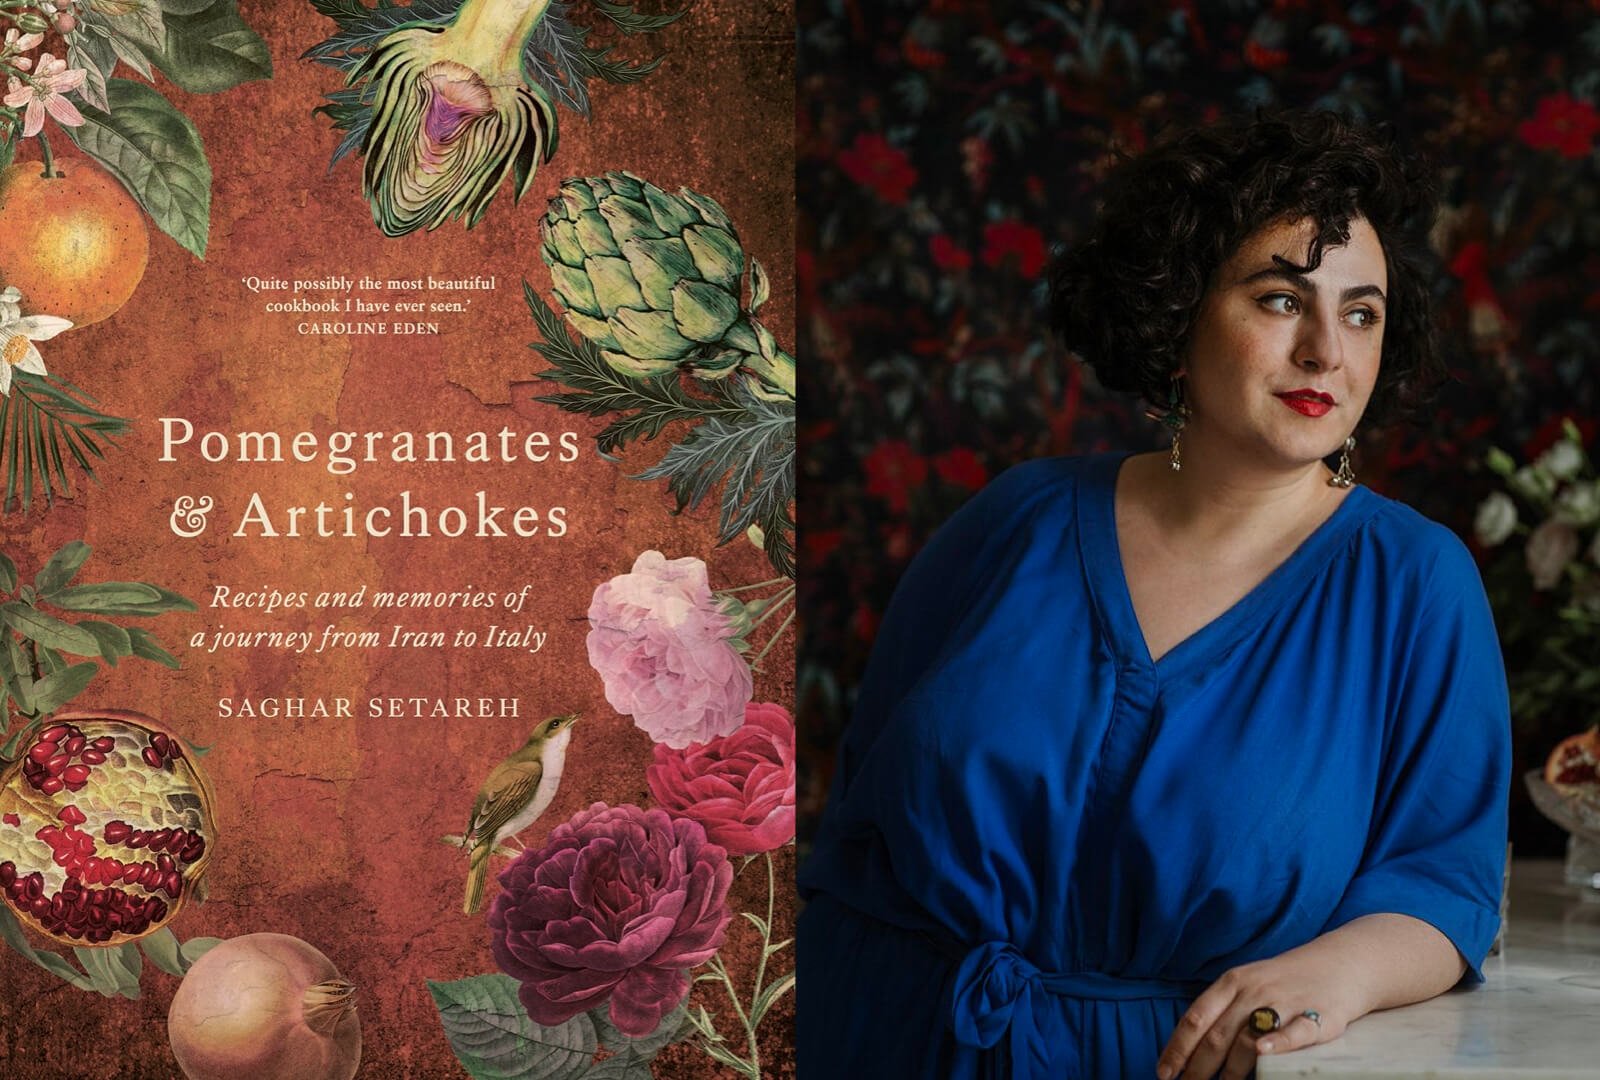 Author Profile: Saghar Setareh, author of Pomegranates & Artichokes